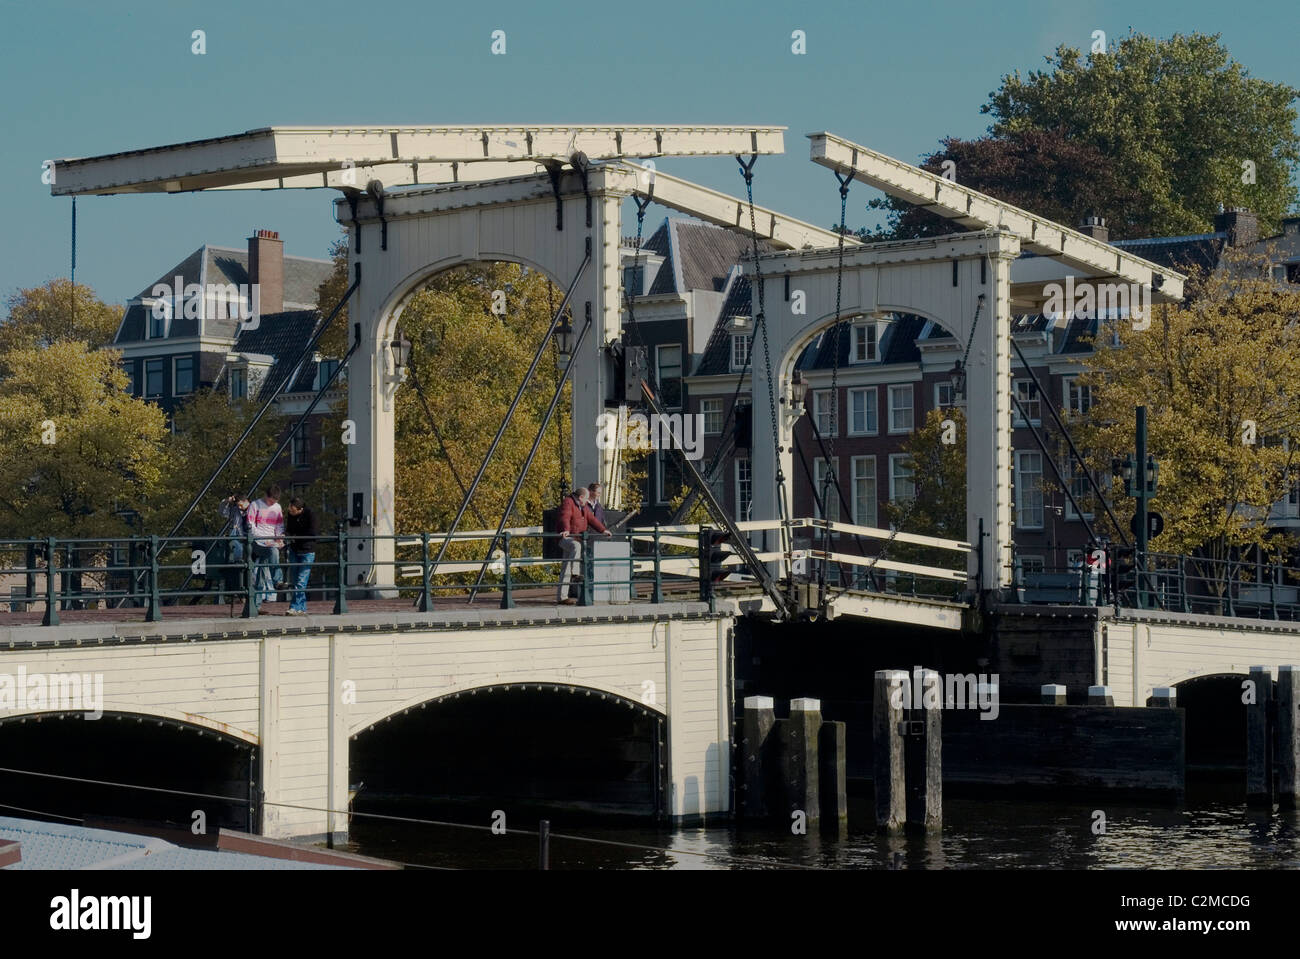 Magere Brug (Skinny Bridge) over the Amstel, Amsterdam. Stock Photo